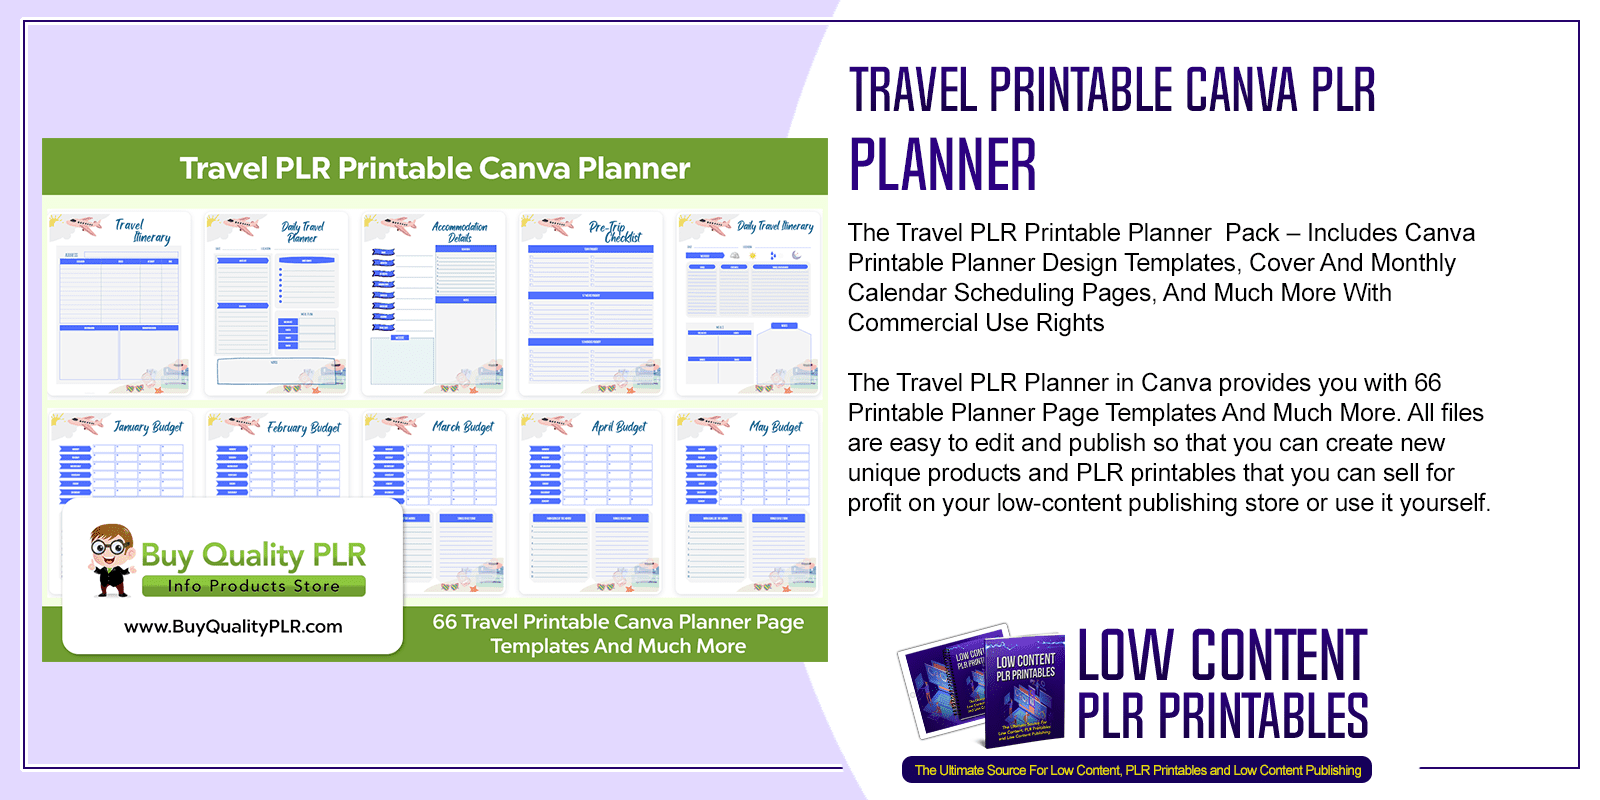 Travel Printable Canva PLR Planner